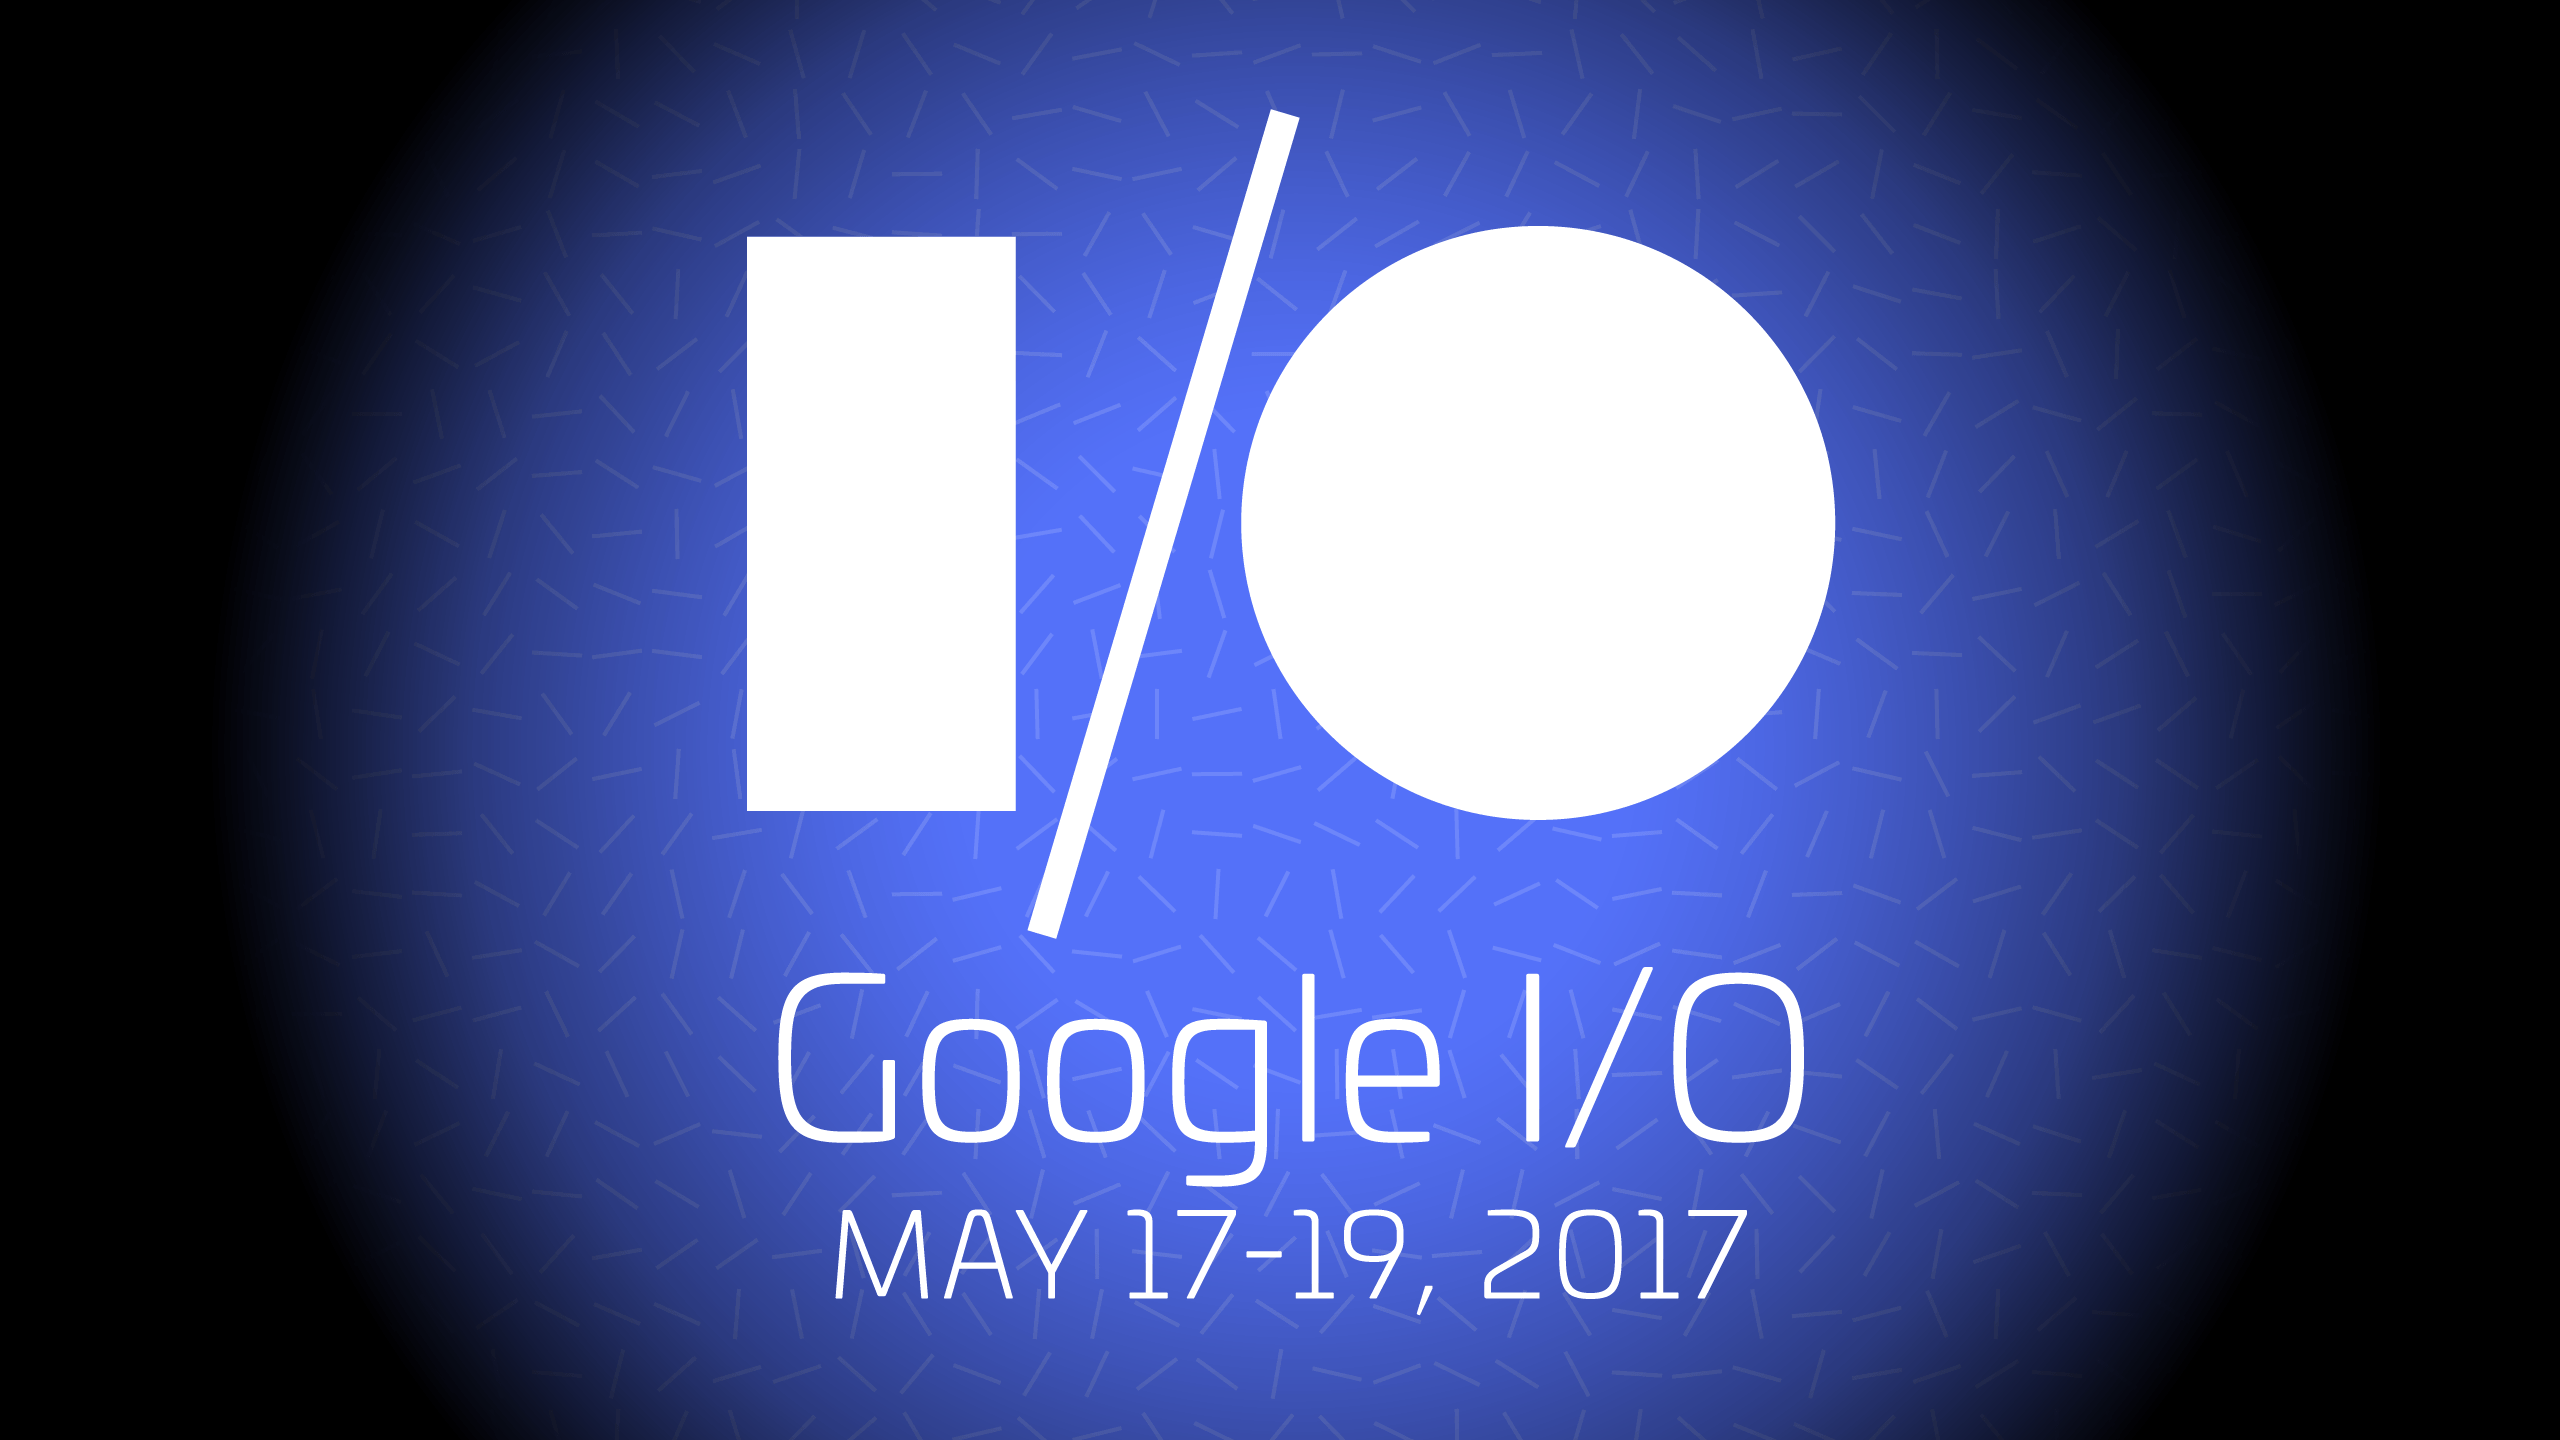 Google 2017. Google i/o. Io 2017. Google host